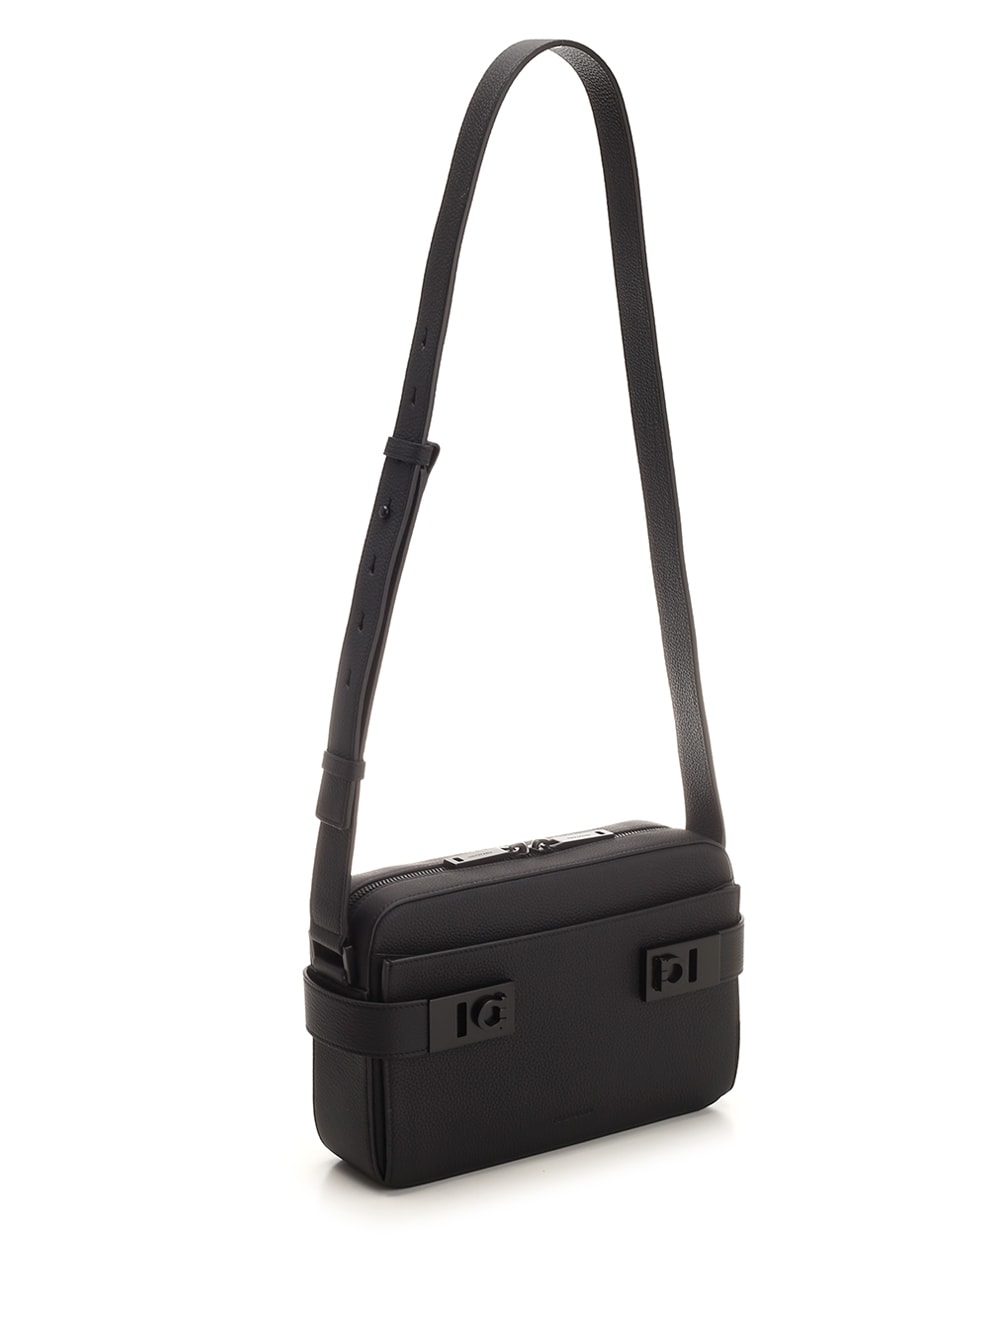 Ferragamo Black shoulder bag with Gancini buckles